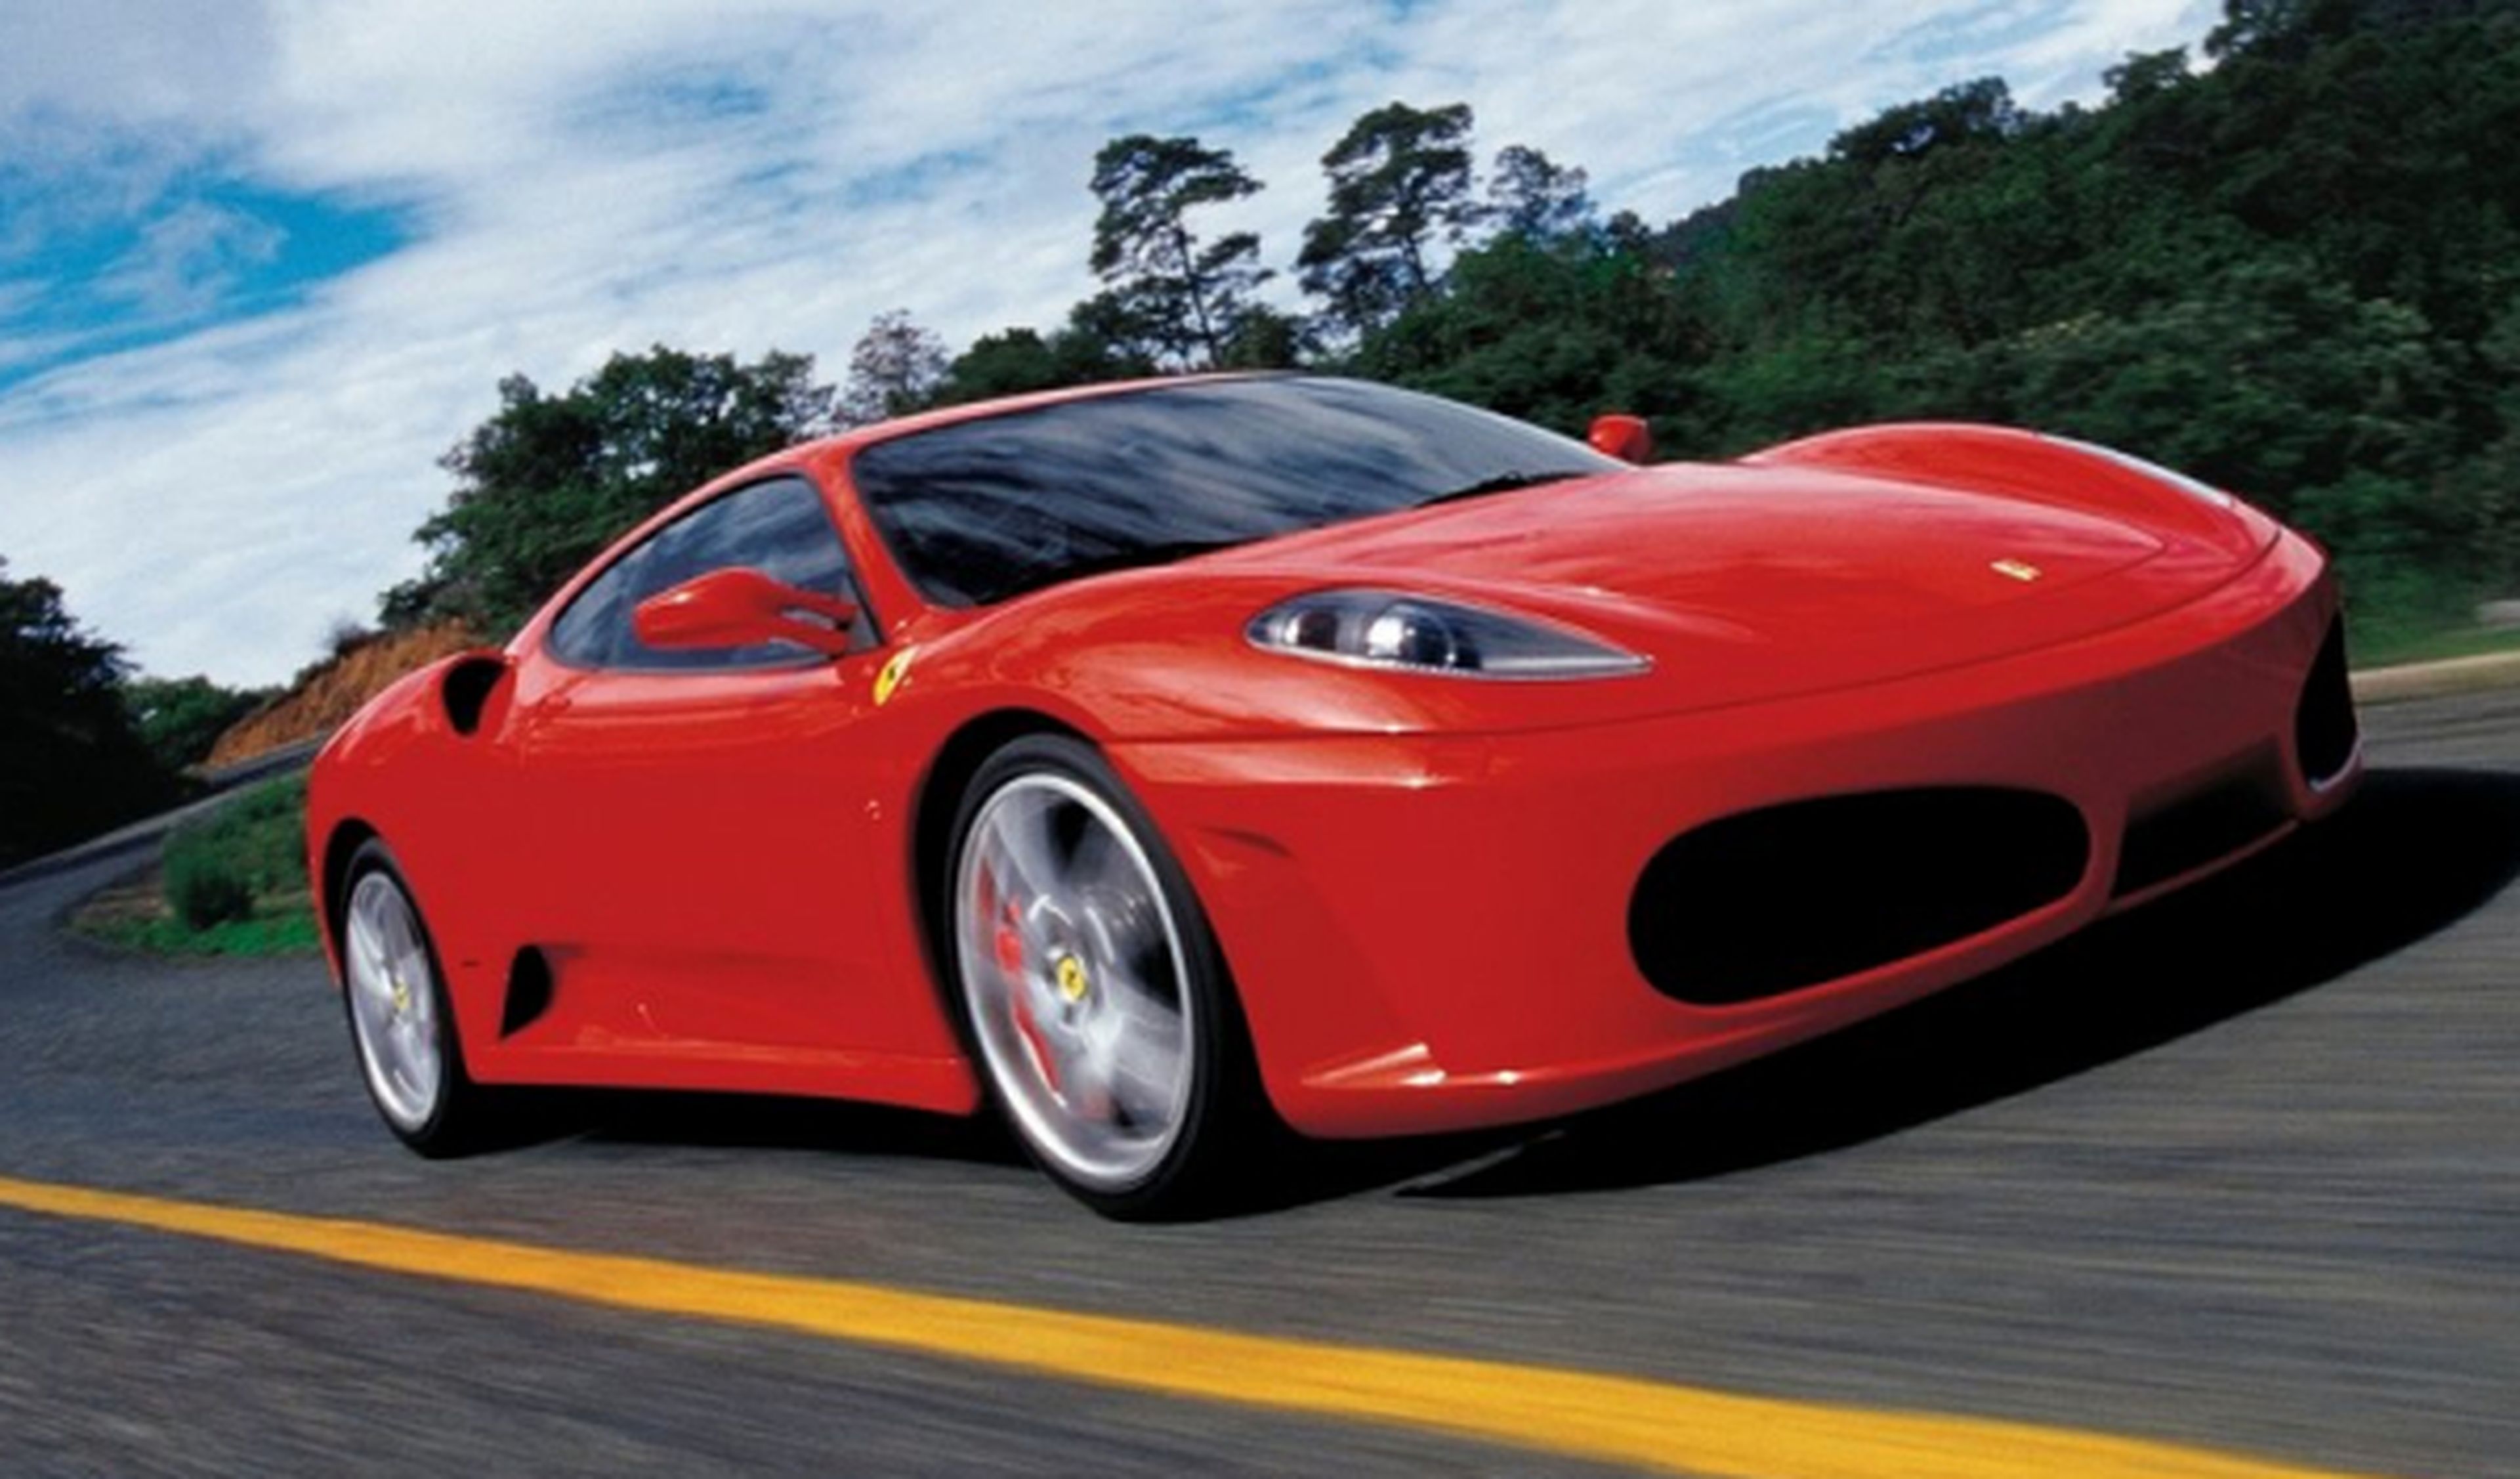 Así queda un Ferrari F430 tras chocar a 300km/h